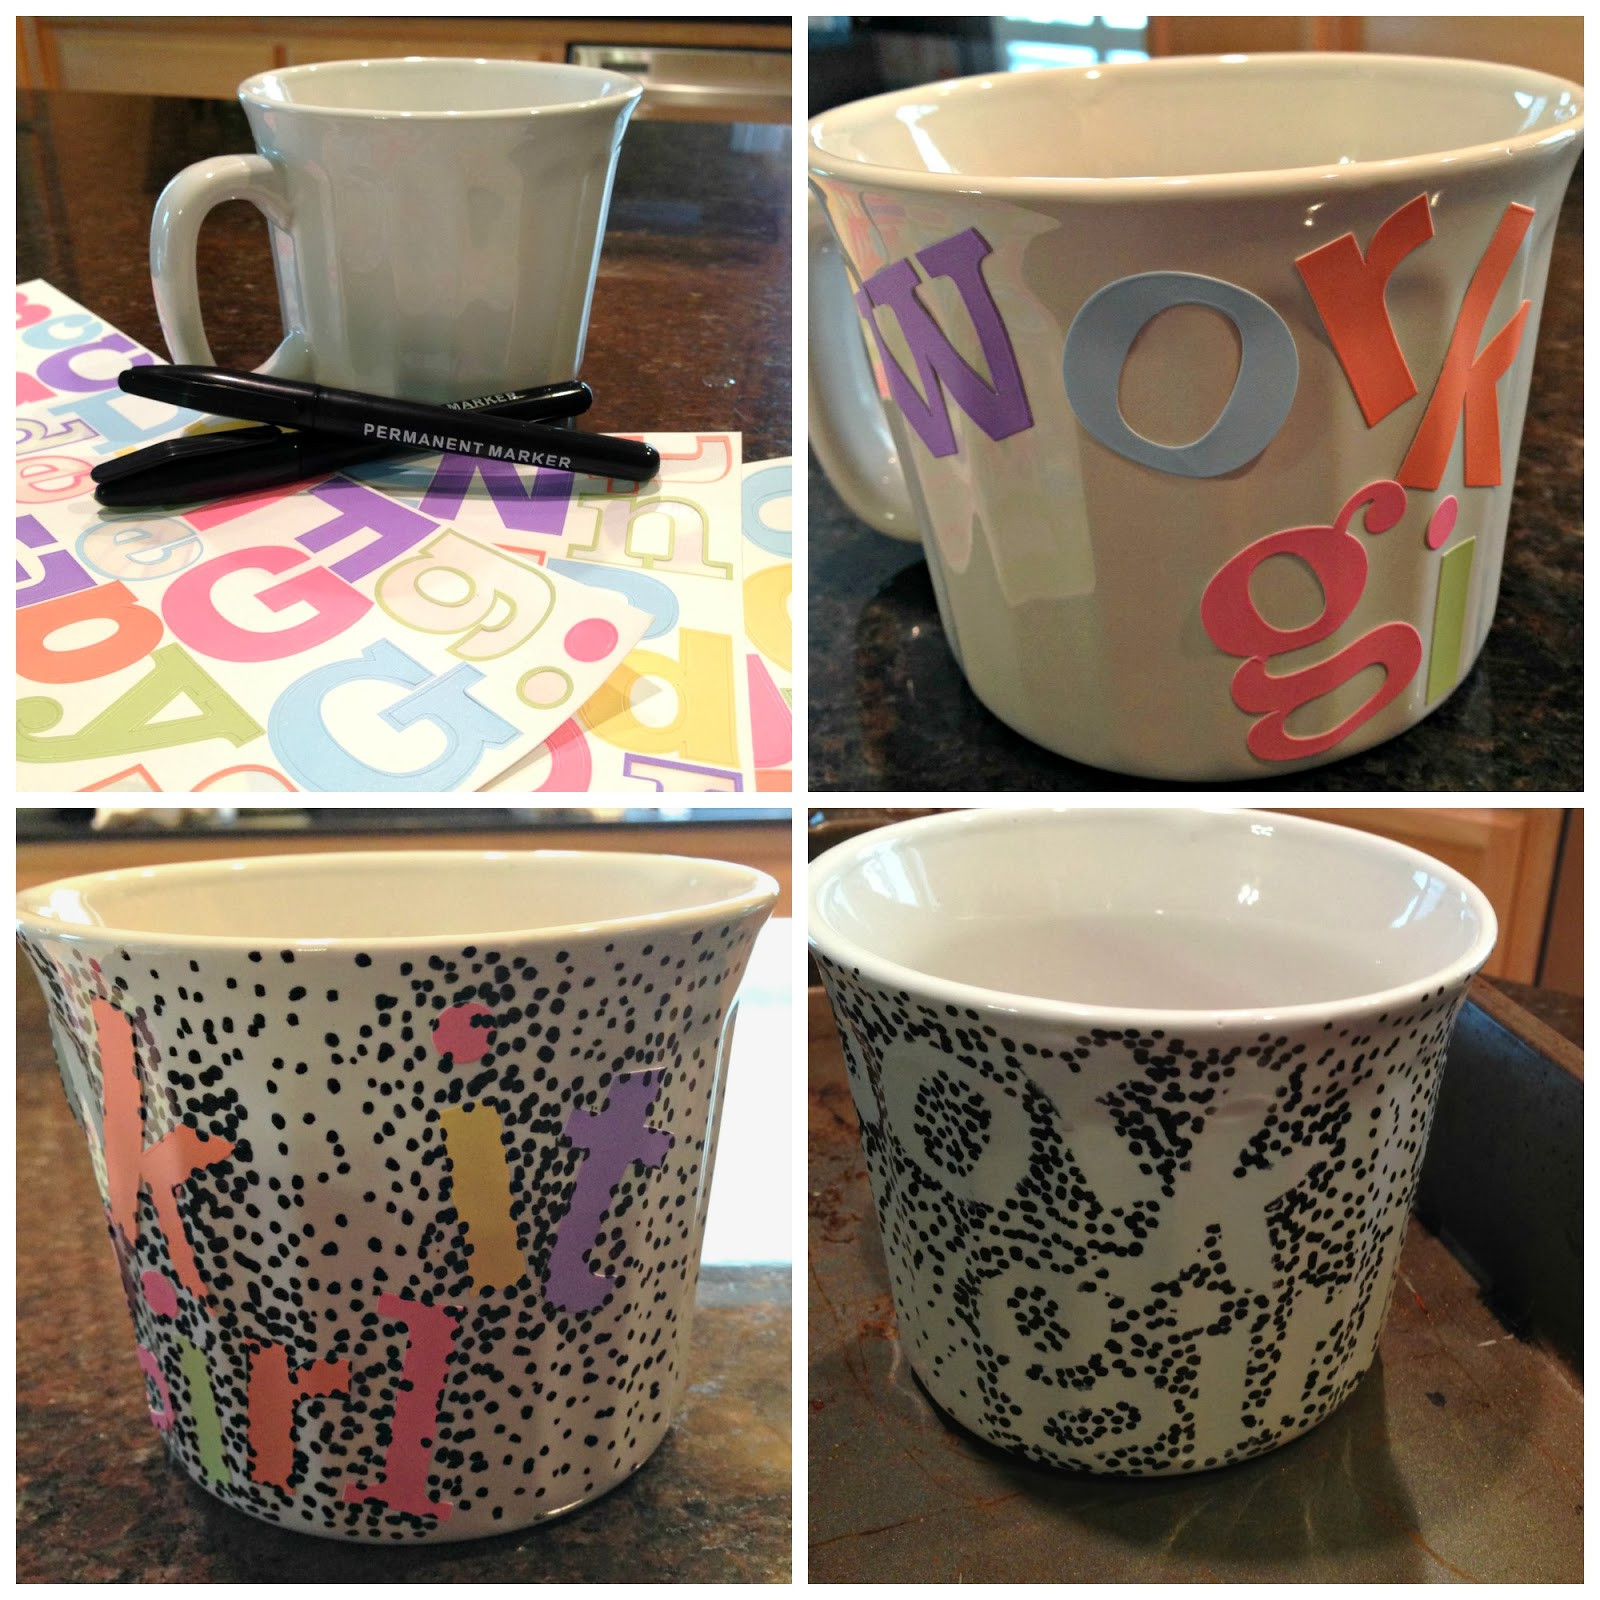 Best ideas about DIY Coffee Mug
. Save or Pin all things katie marie DIY Coffee Mug Design Now.